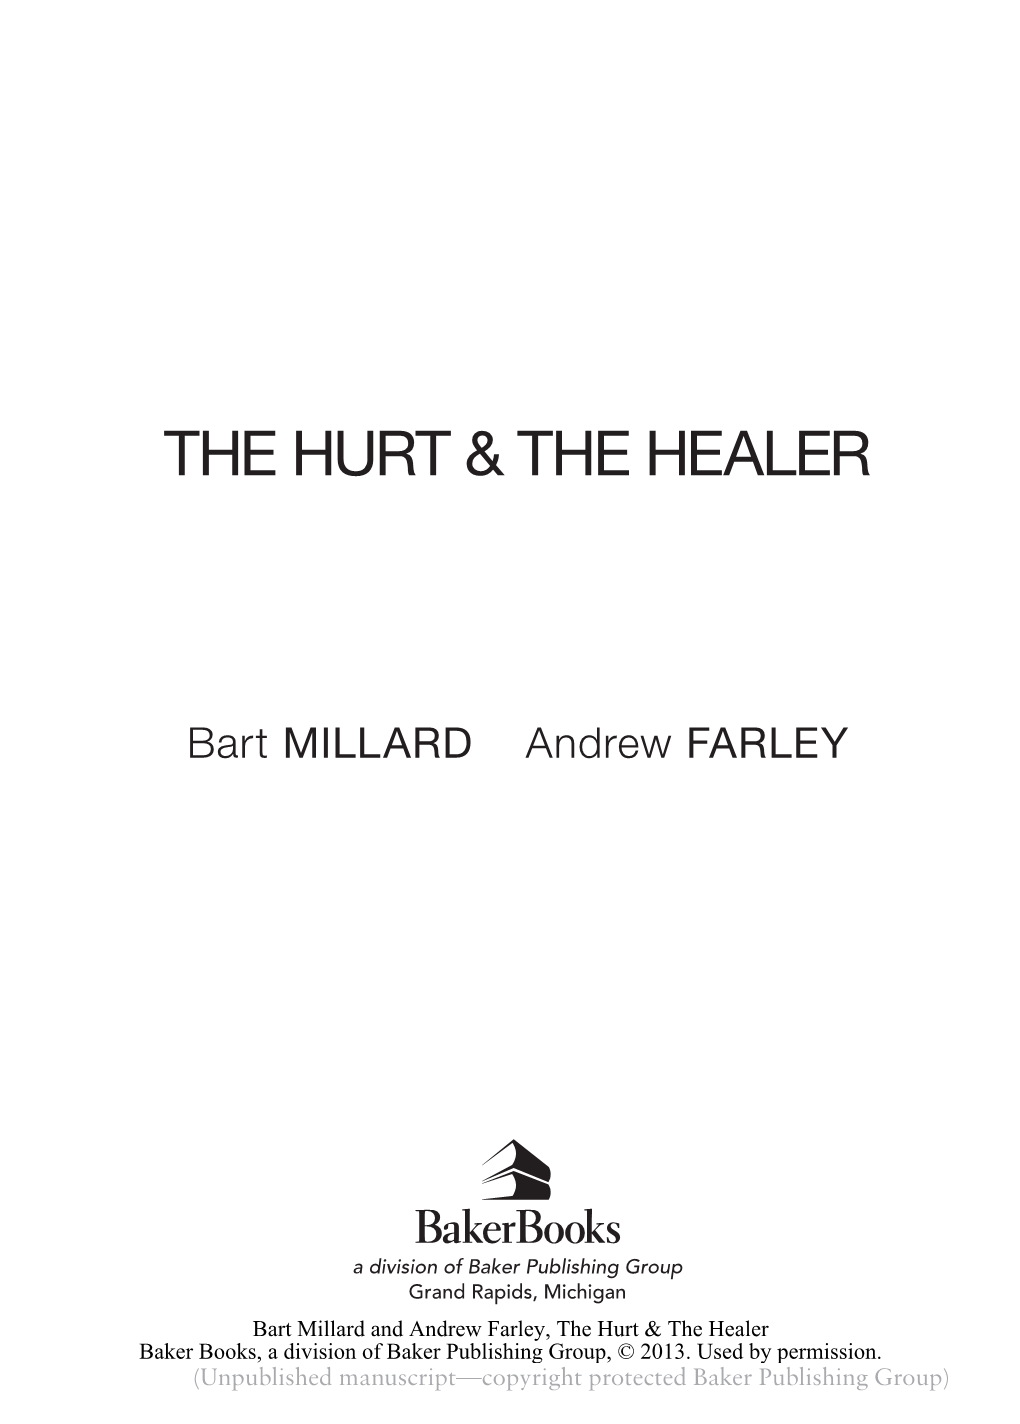 The Hurt & the Healer